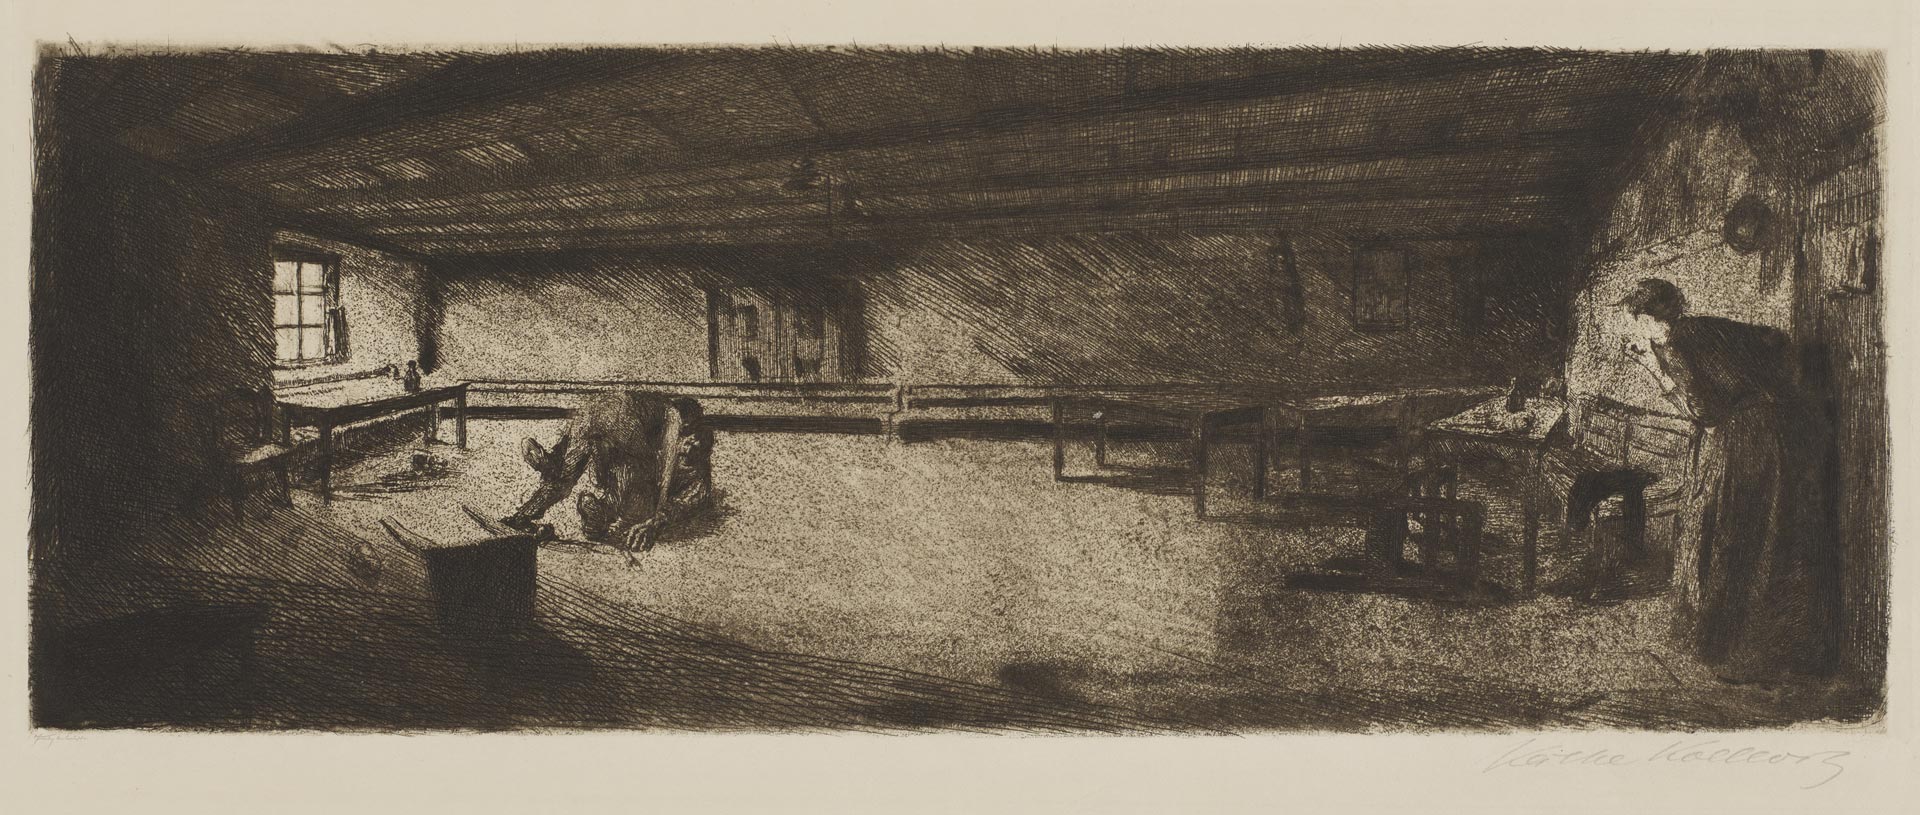 Käthe Kollwitz, Szene aus Germinal, 1893, Strichätzung, Kaltnadel, Schmirgel, Kn 19 III b